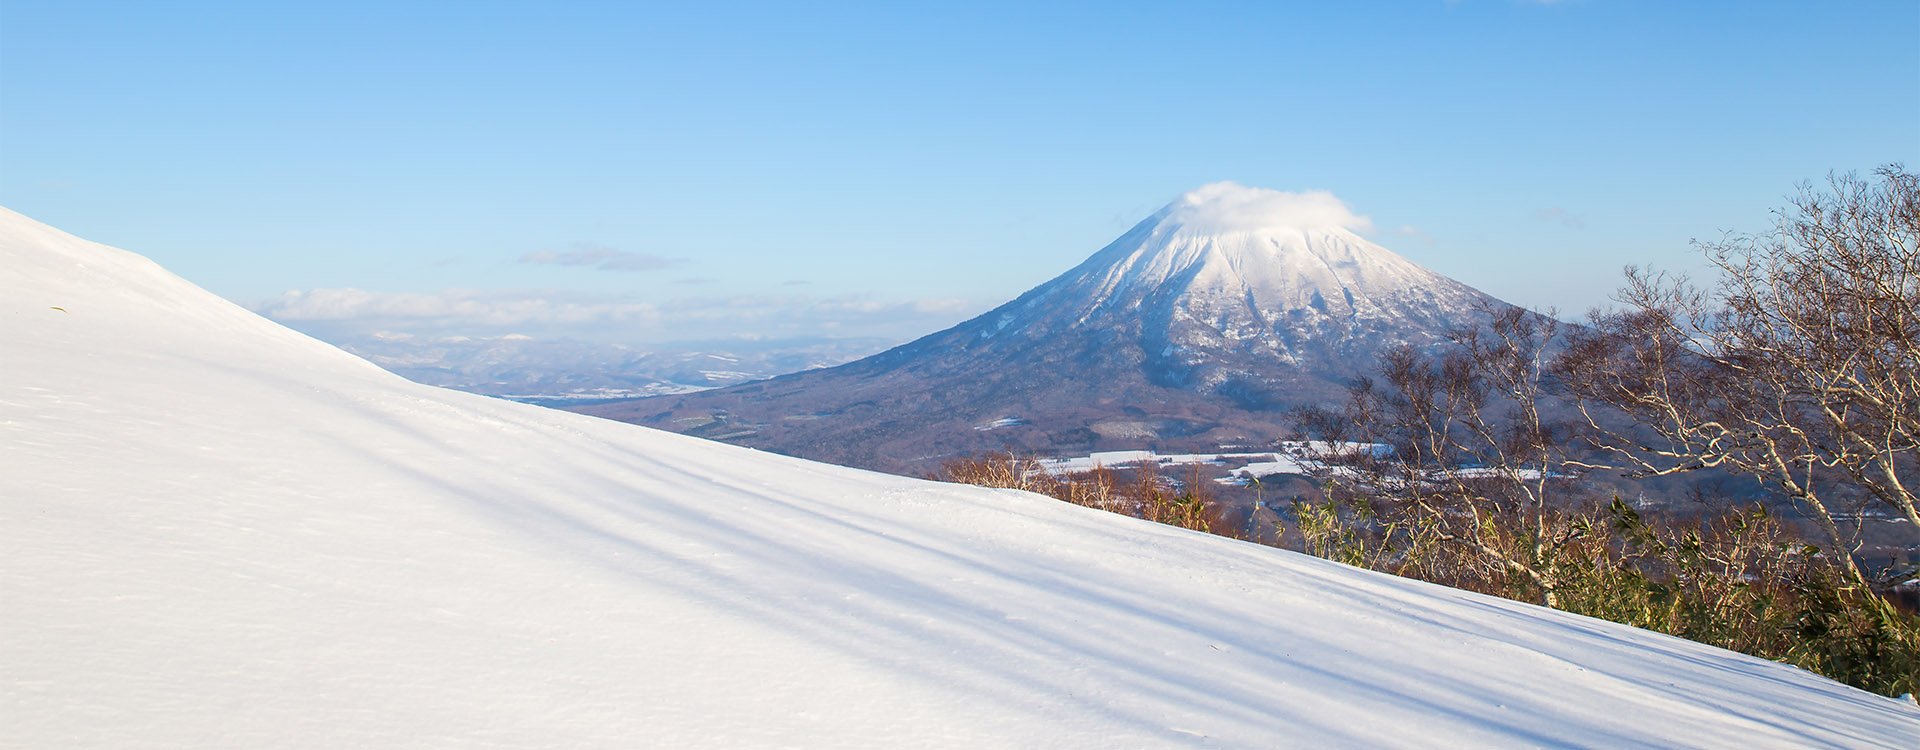 Winter Landscape of snow hill and Mt.Yotei with blue sky in Niseko, Hokkaido, Japan